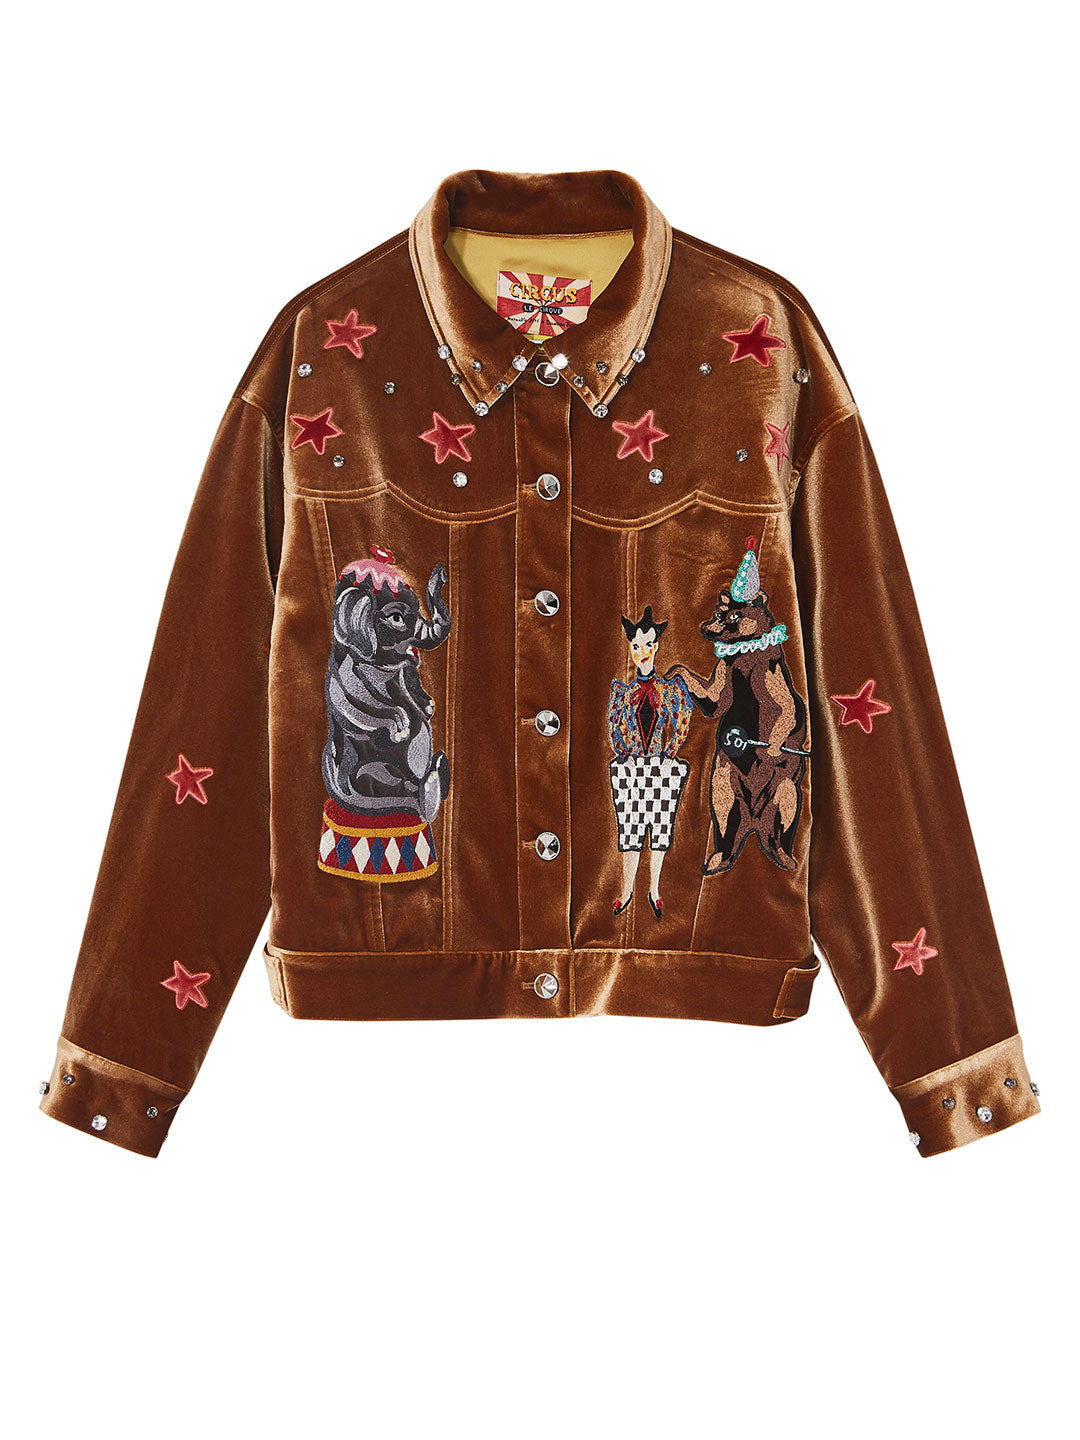 Unlogical Poem Circus Embroidered Brown Velvet Jacket